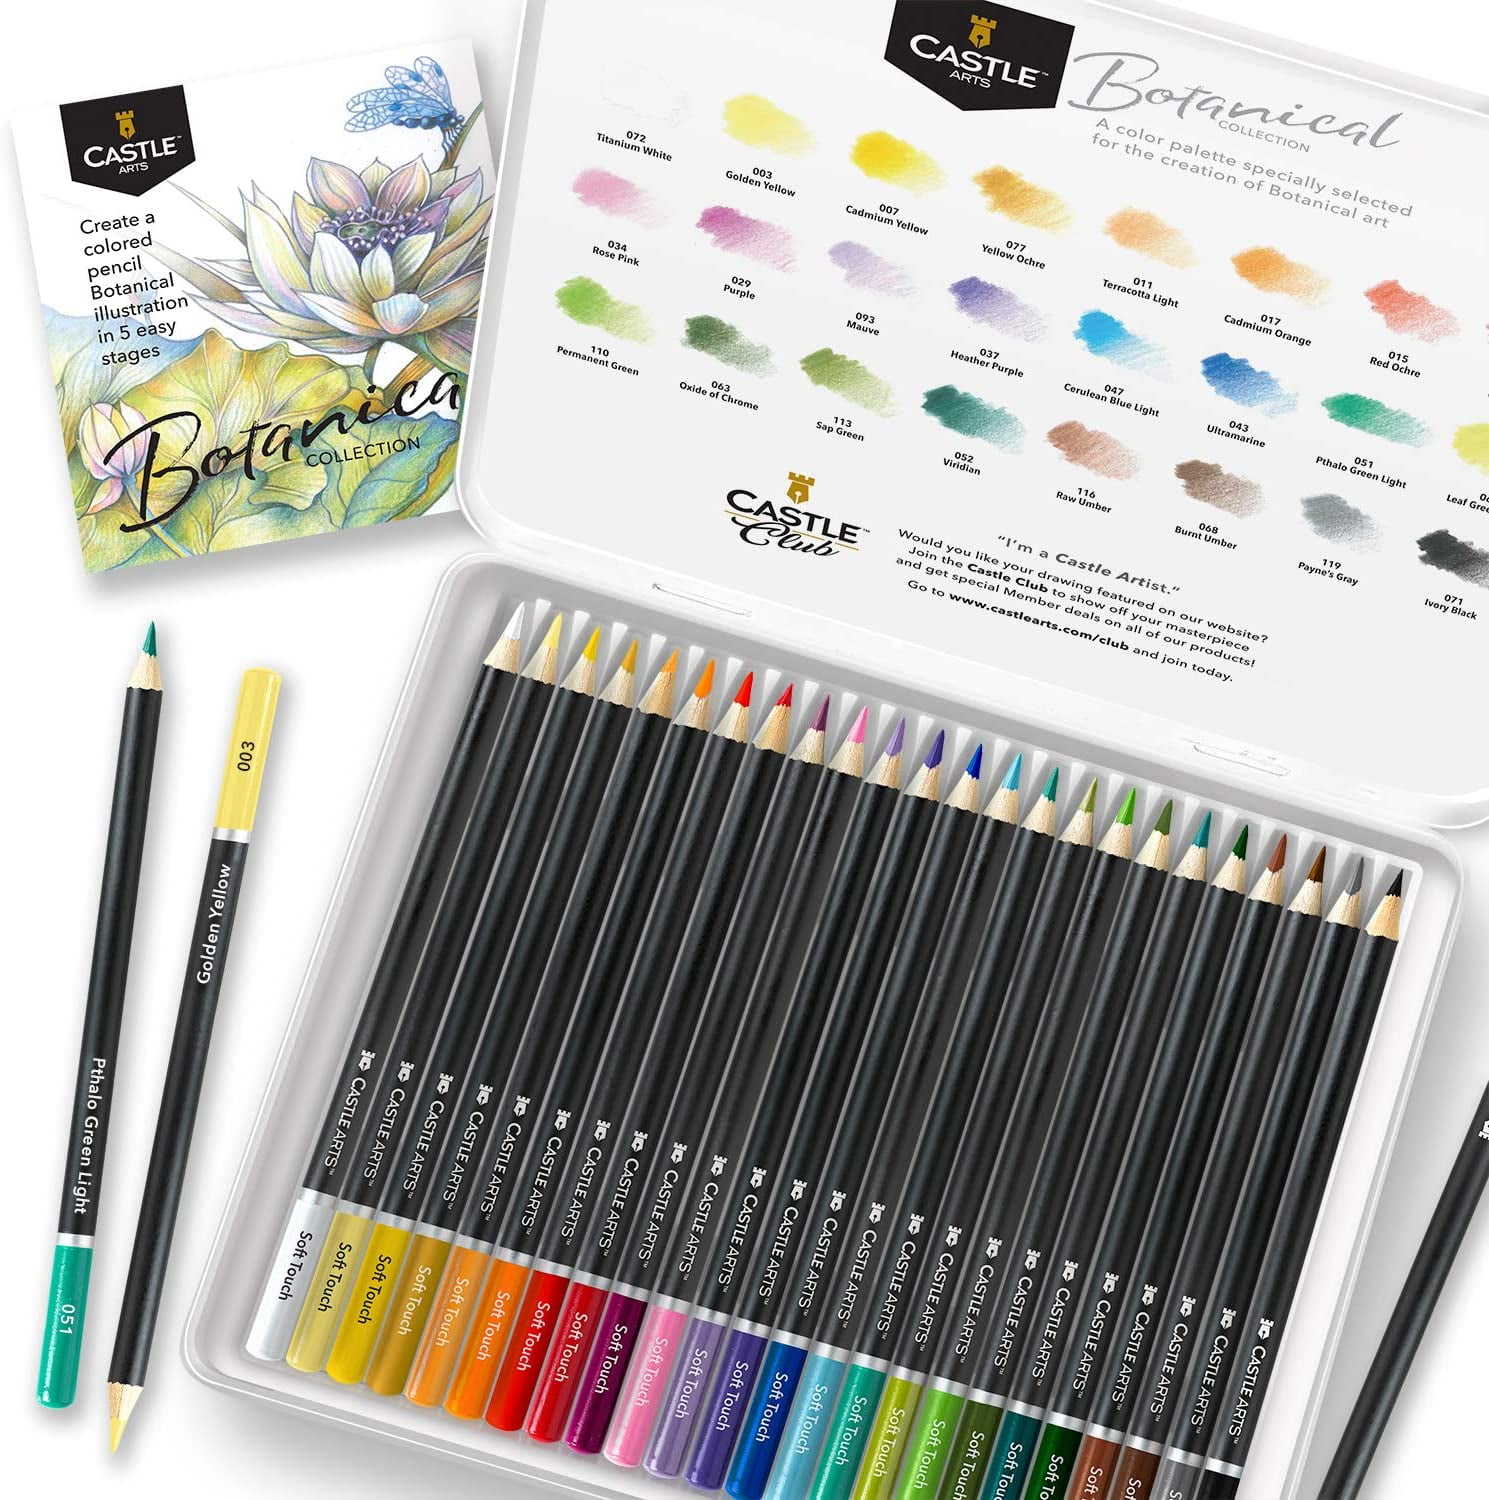 Monet Inspired Colored Pencil Art Gift Set - 'Monet Colors' – Pop